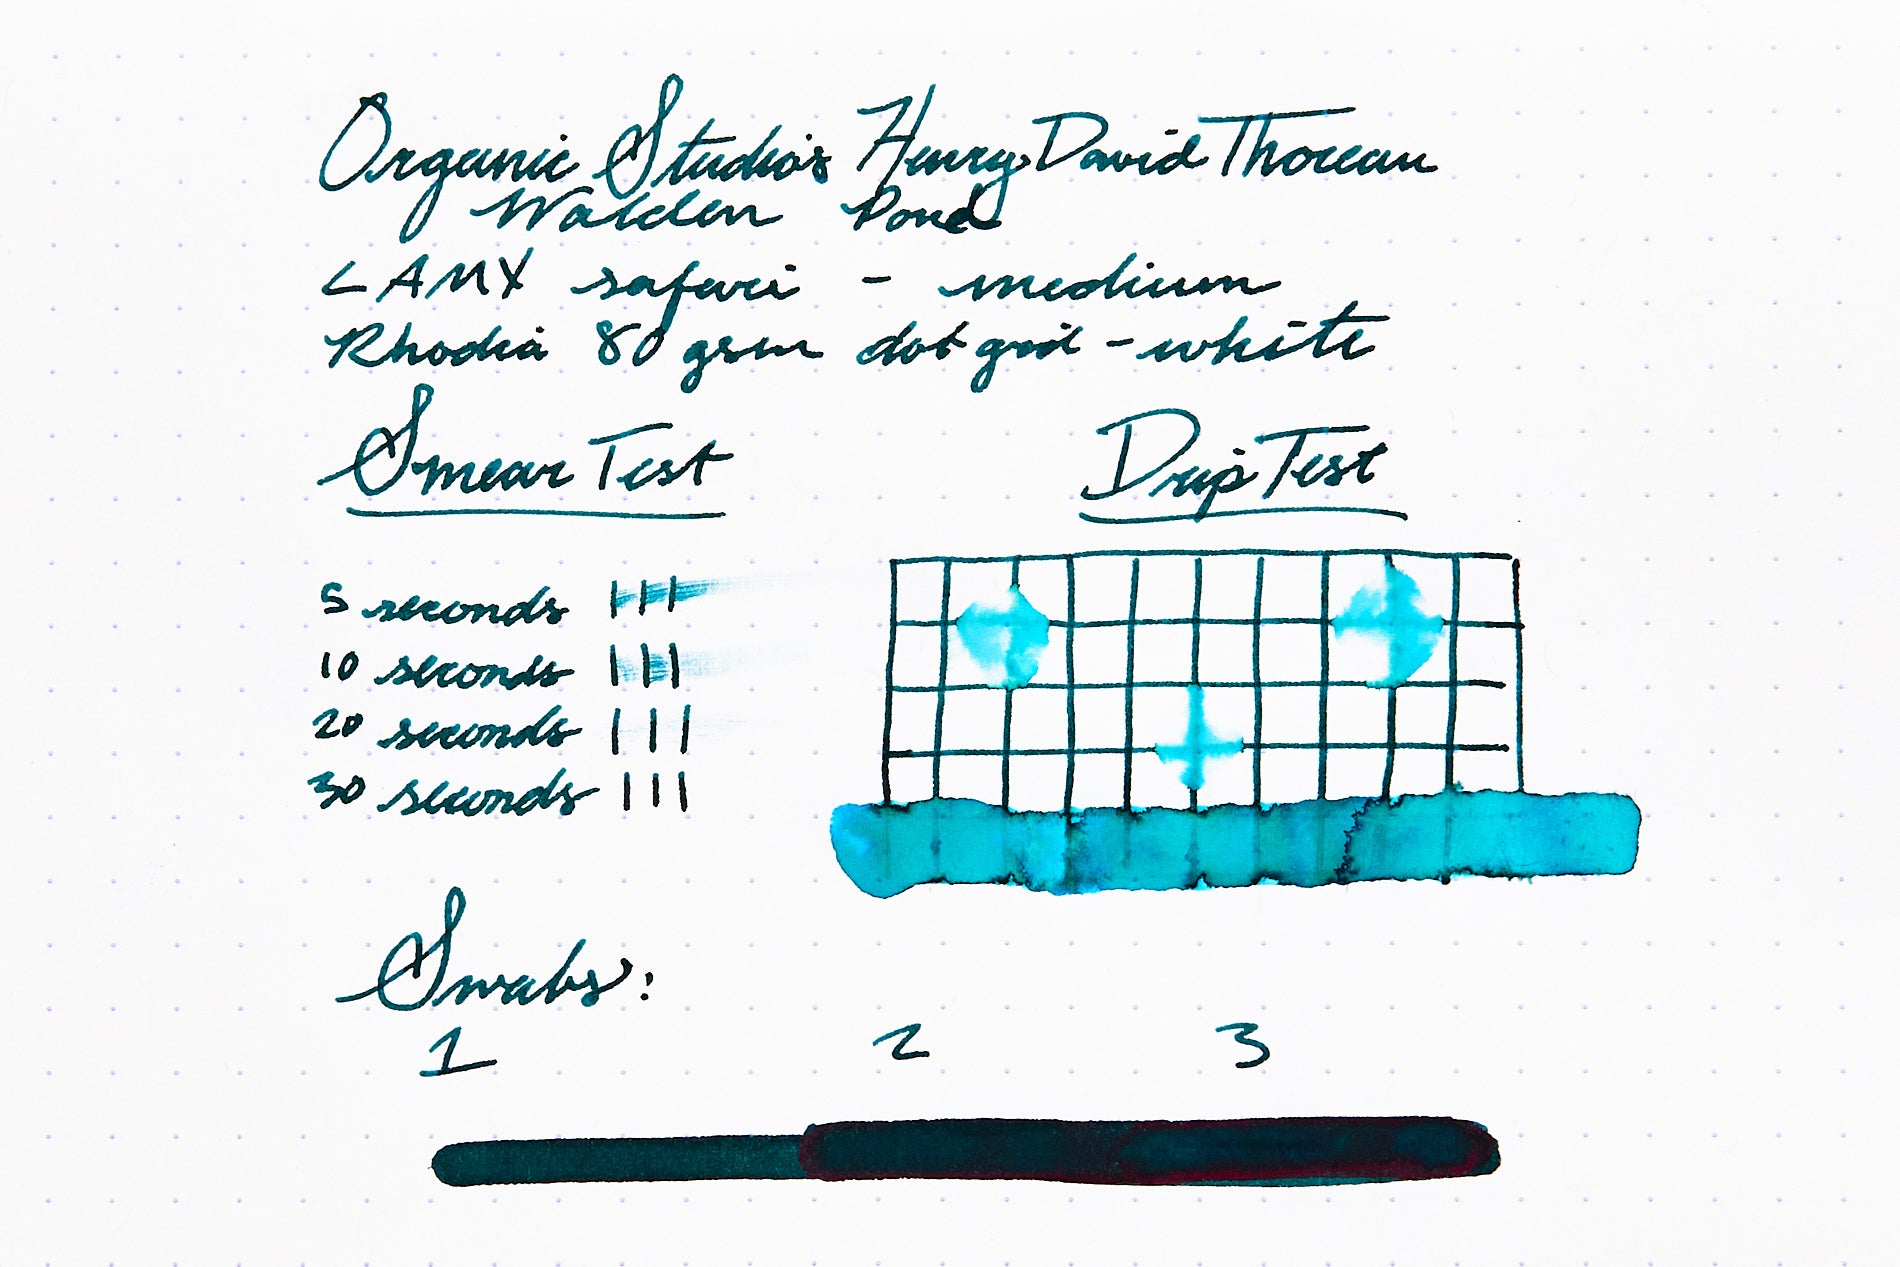 Organics Studio Henry David Thoreau Walden Pond Ink writing sample on white dot grid paper